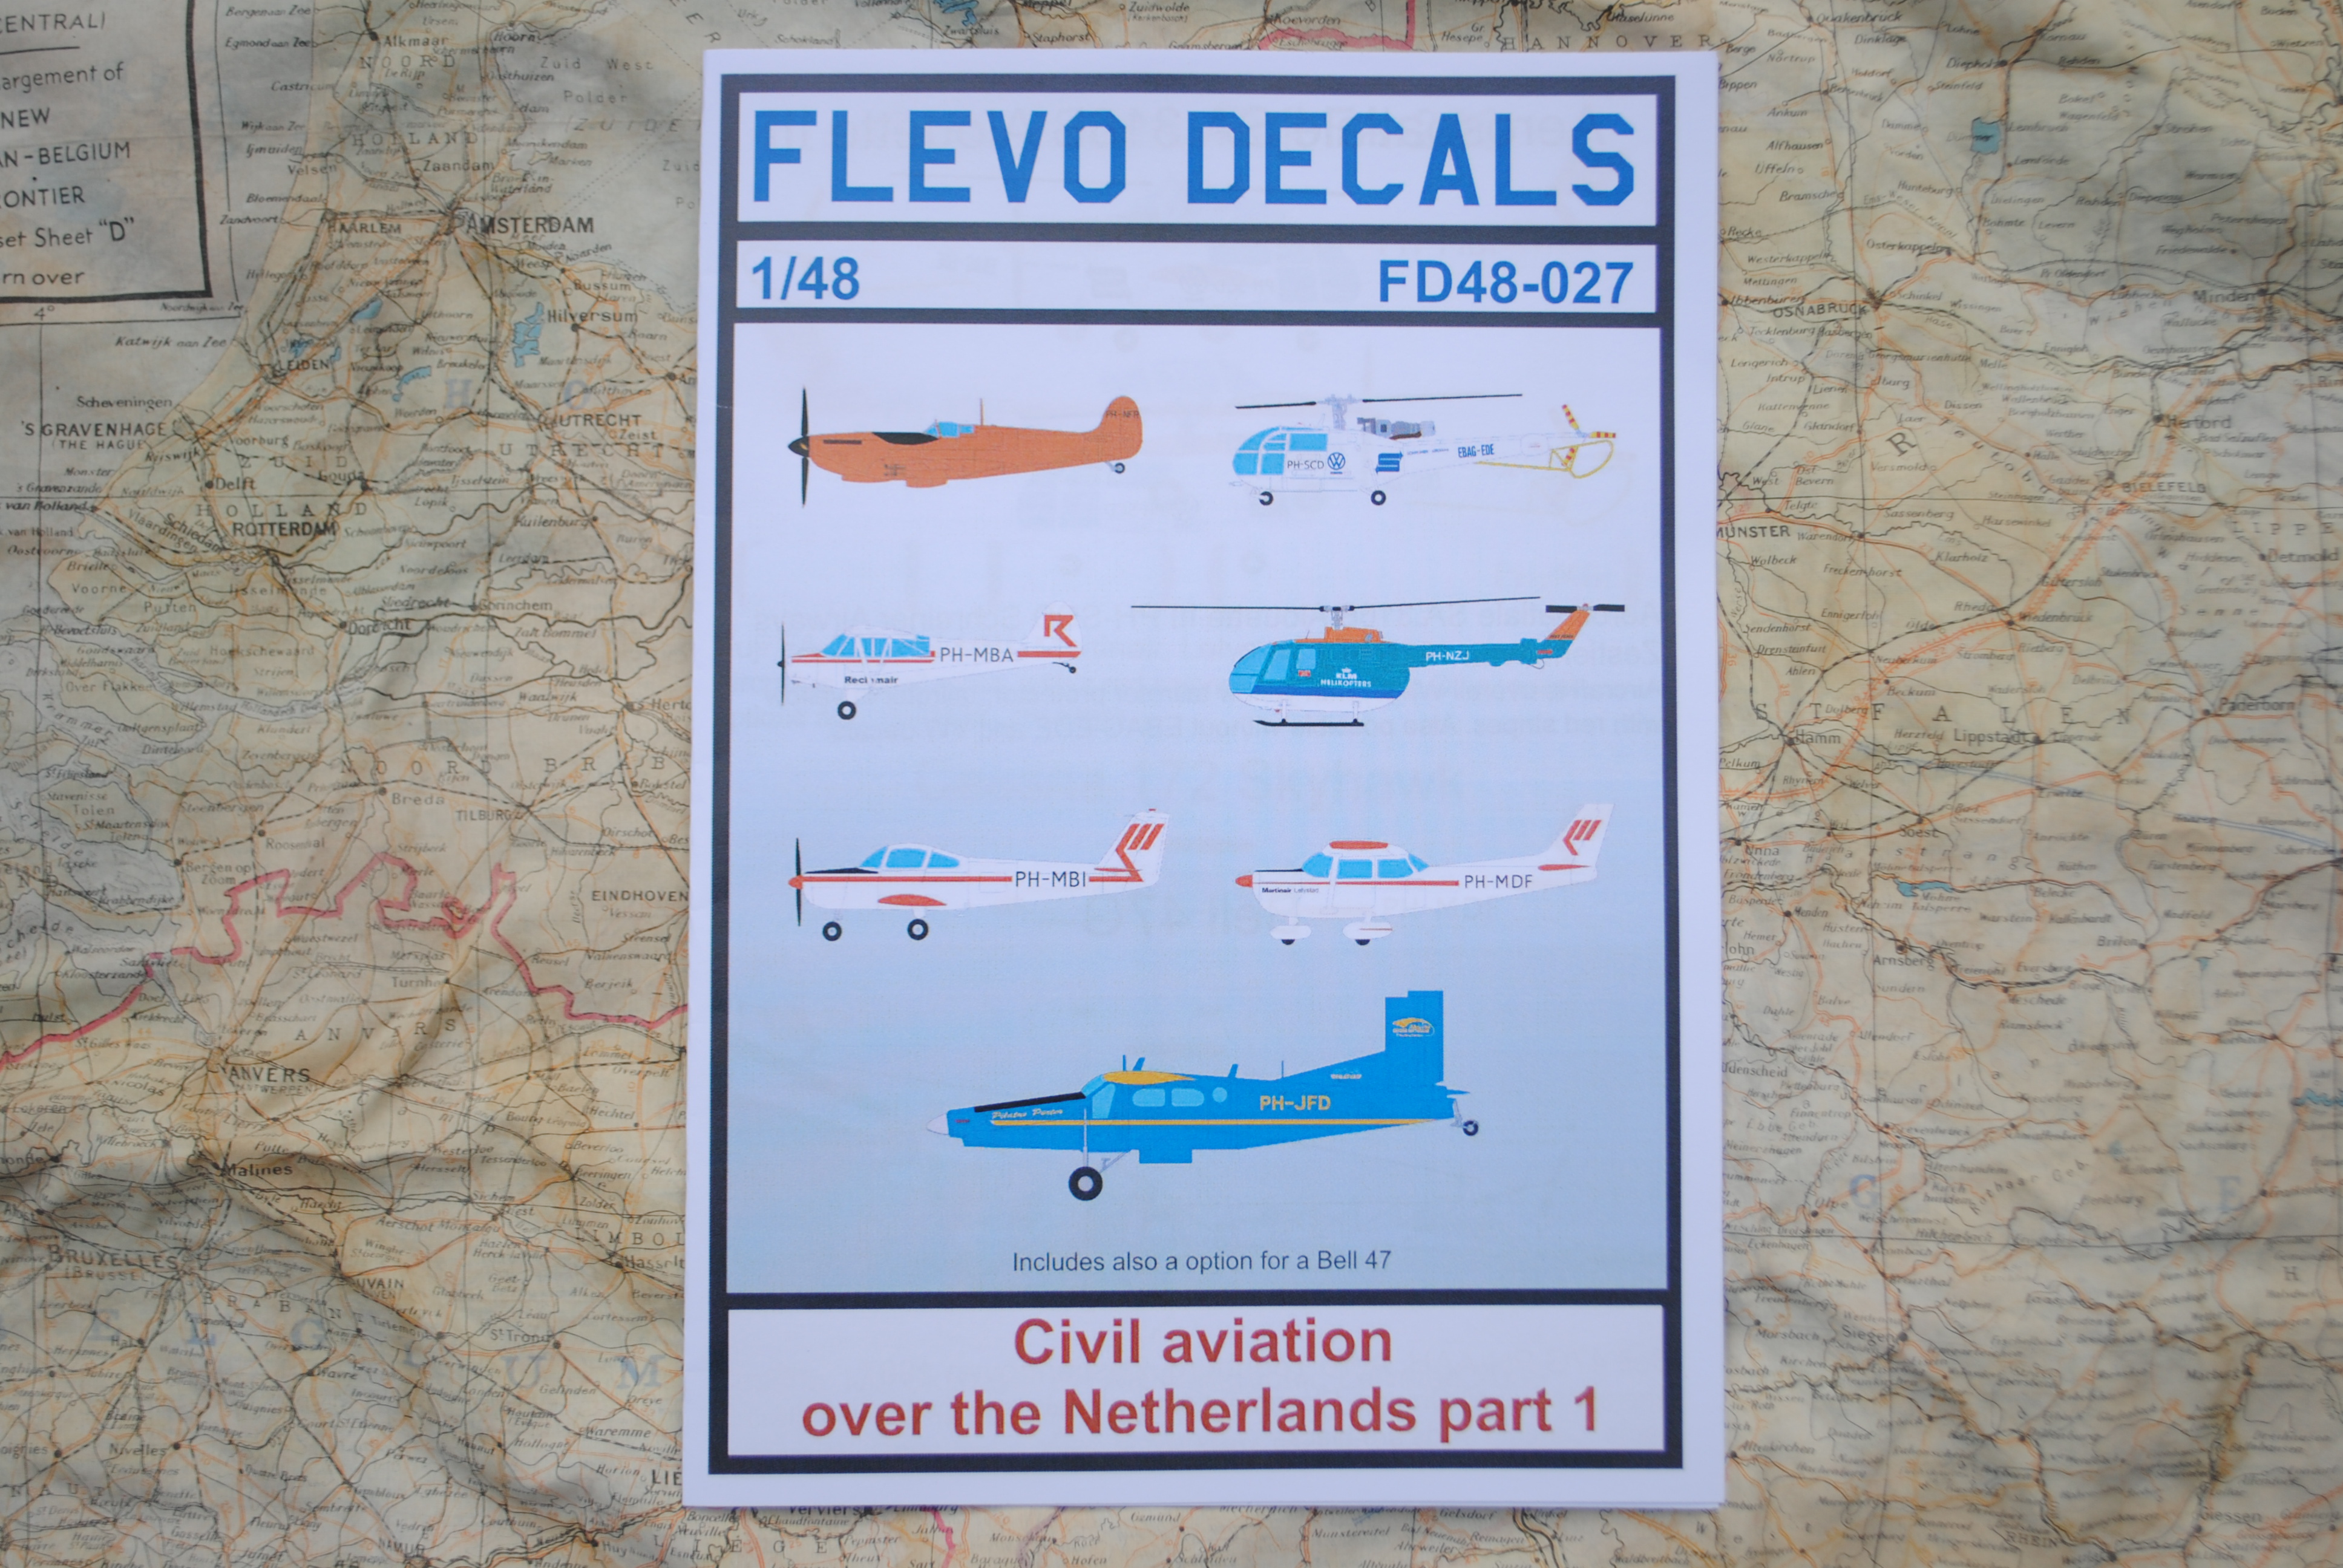 Flevo Decals FD48-027 Civil aviation over the Netherlands part 1